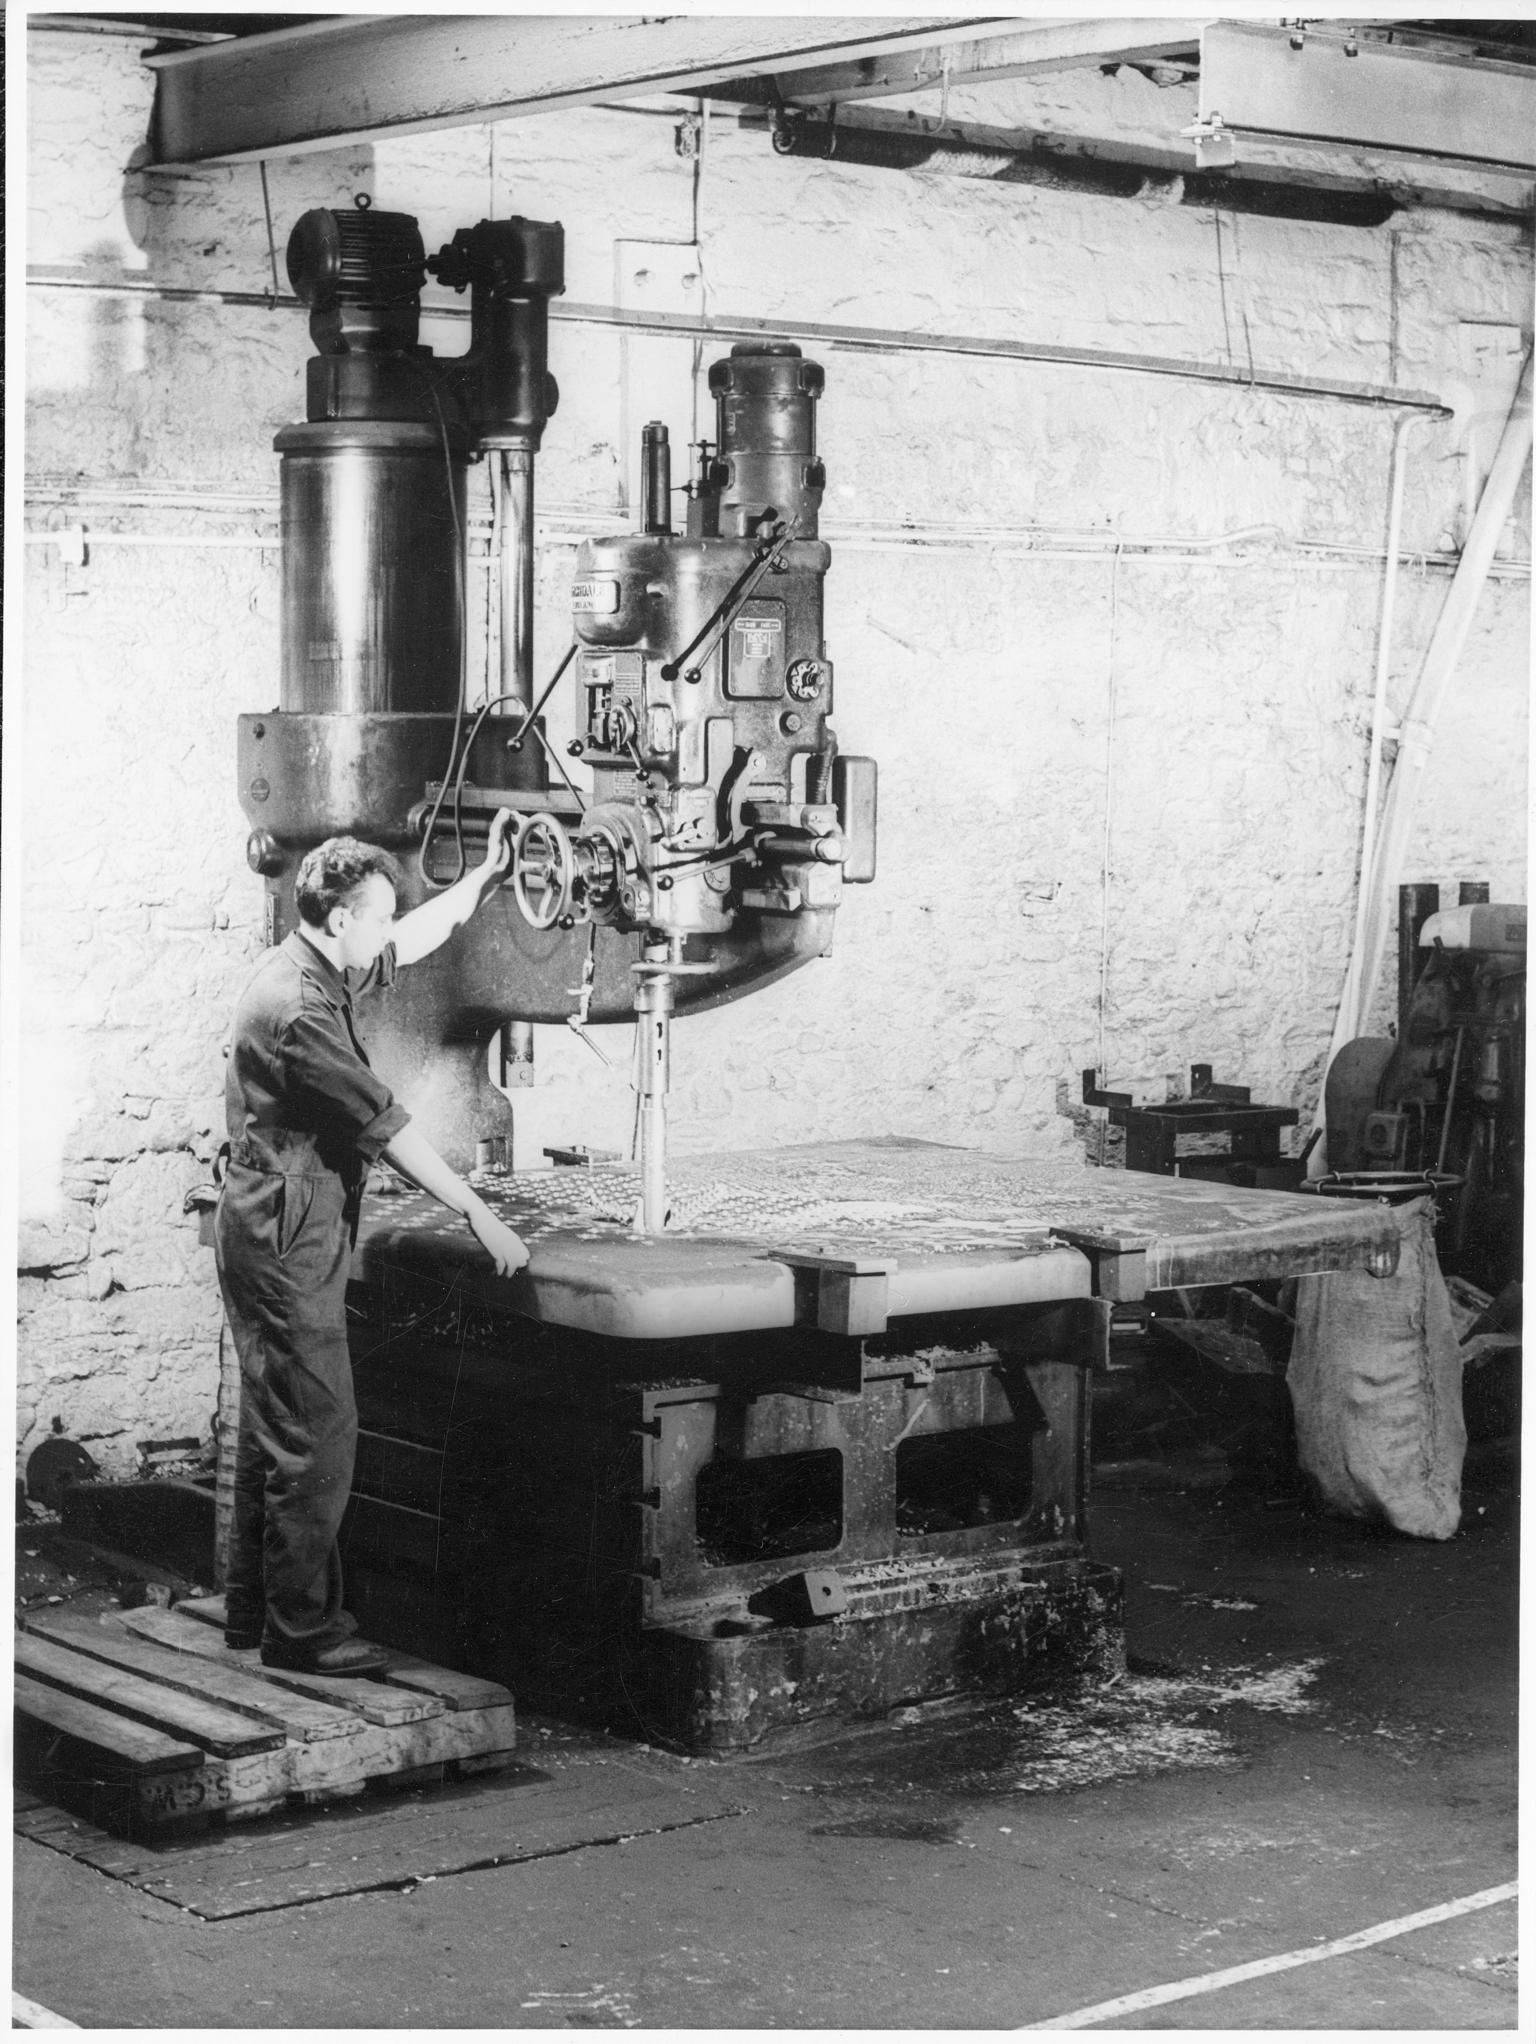 Locomotive tubeplate manufacture, photograph